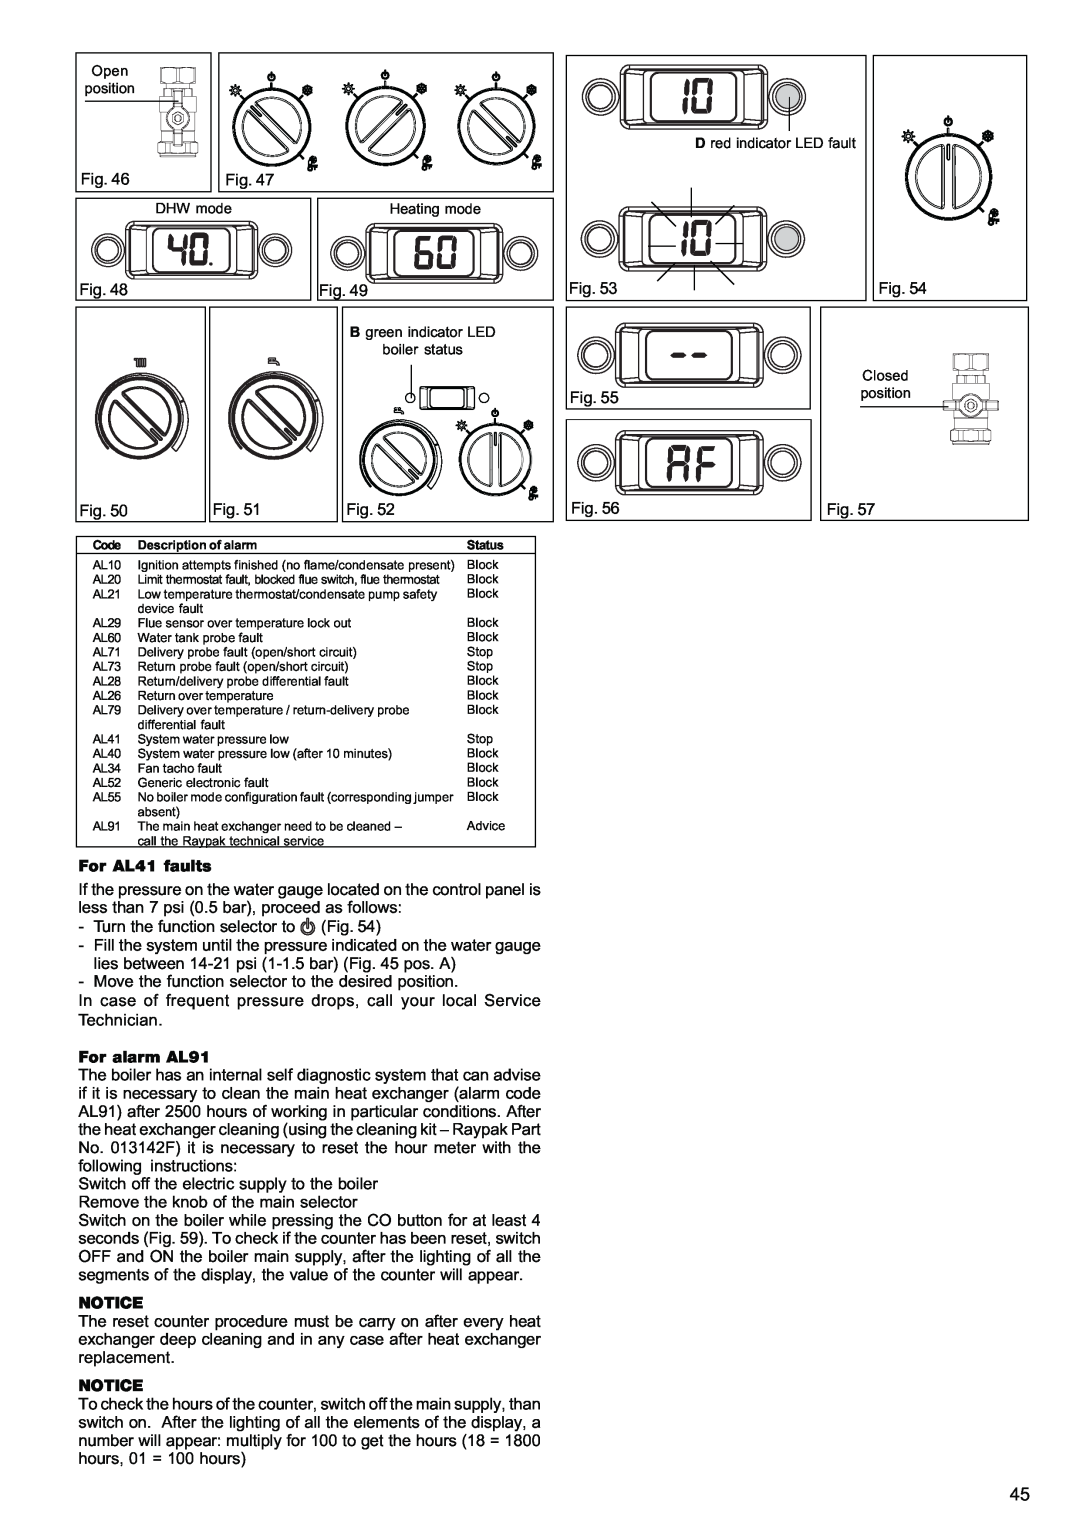 Raypak 120, 85 manual For AL41 faults, For alarm AL91, Notice 